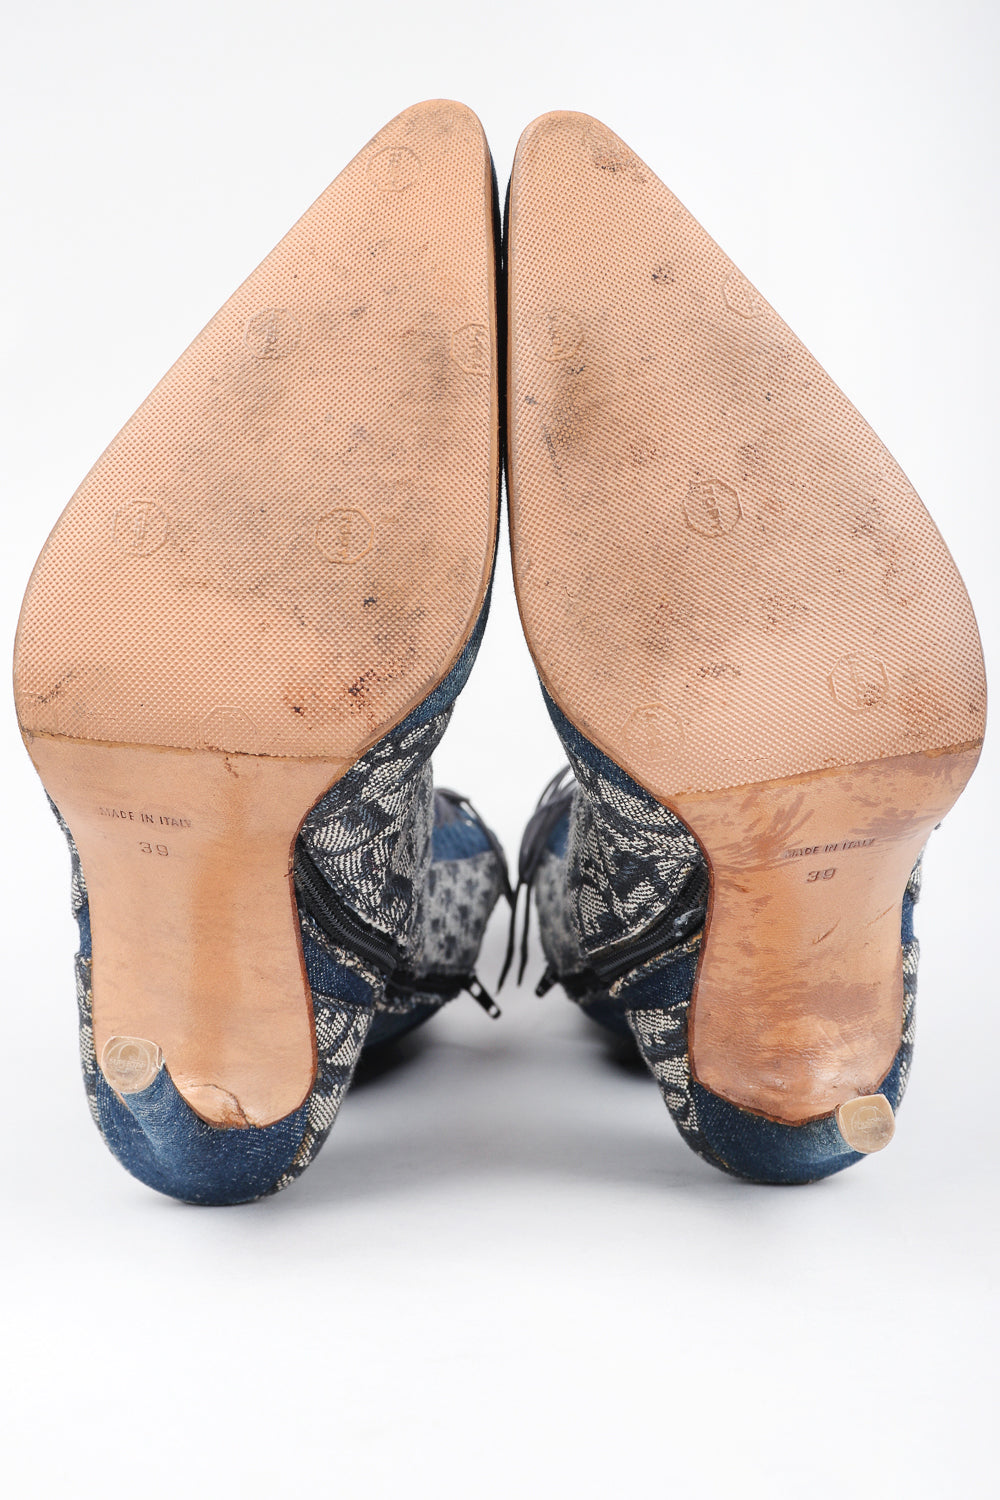 Recess Designer Consignment Vintage Christian Dior Tall Denim Monogram Boots Los Angeles Resale